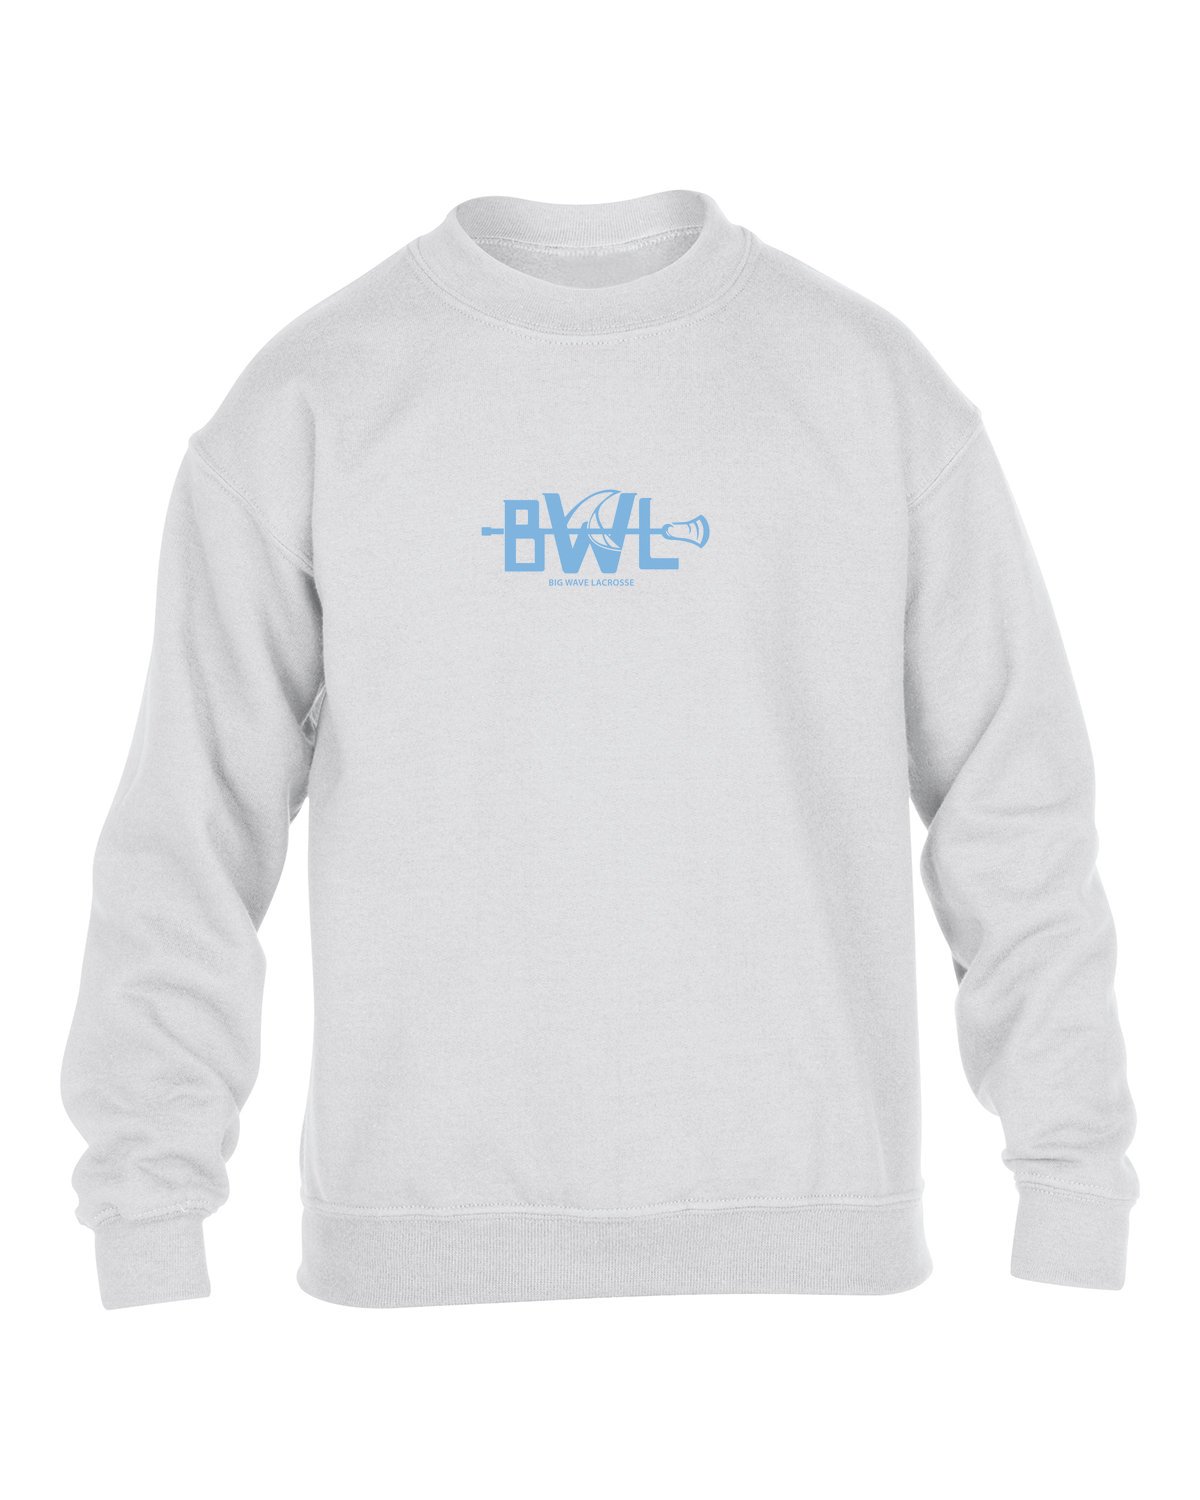 Big Wave Lacrosse Premium Youth Sweatshirt Signature Lacrosse